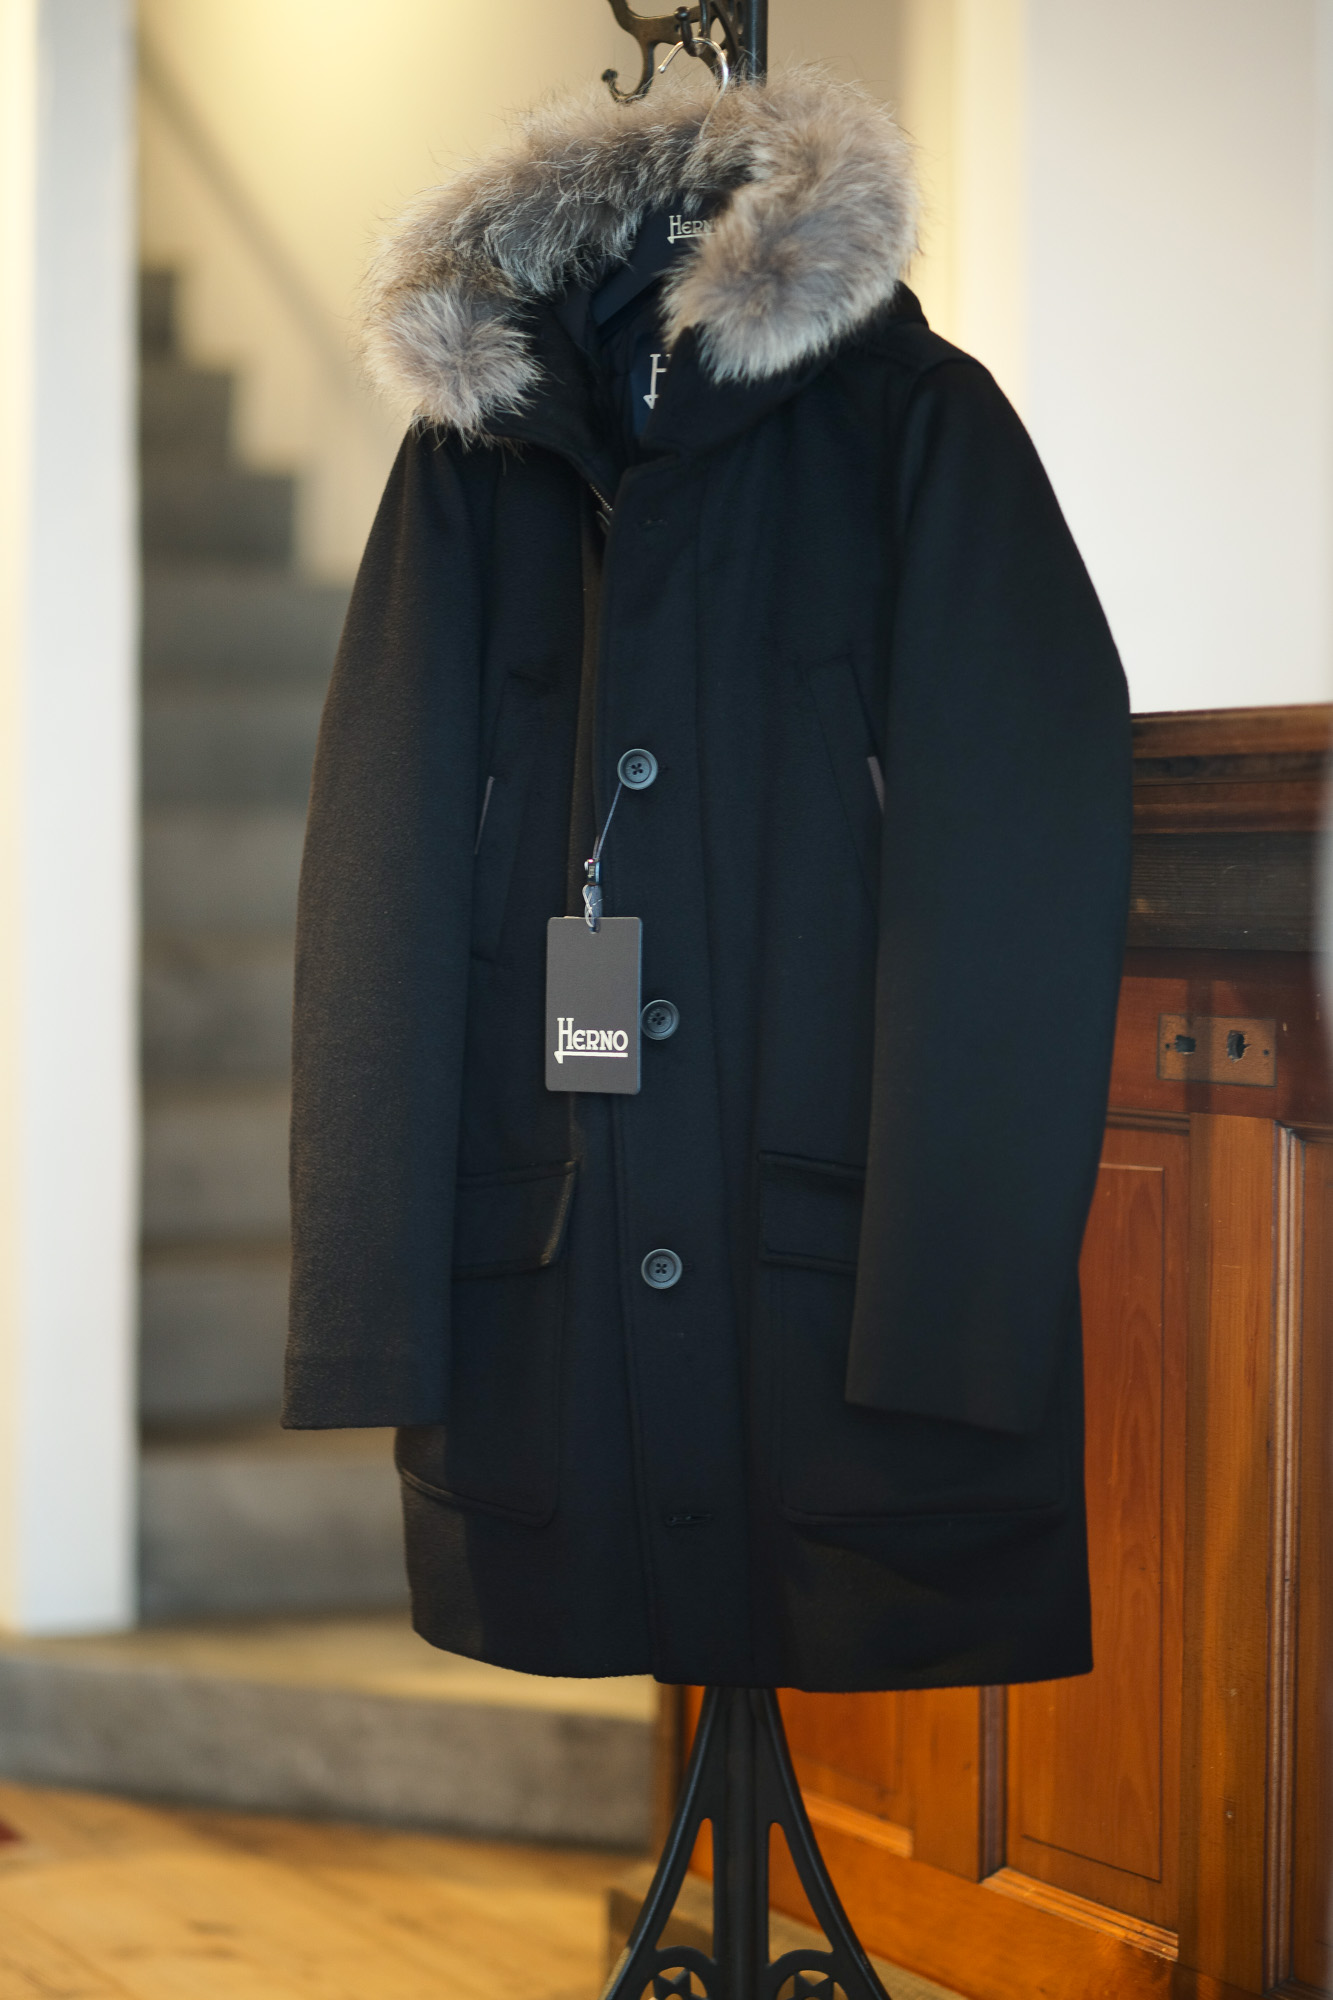 HERNO(ヘルノ) N-3B Cashmere coat (カシミア コート) LUIGI COLOMBO ...